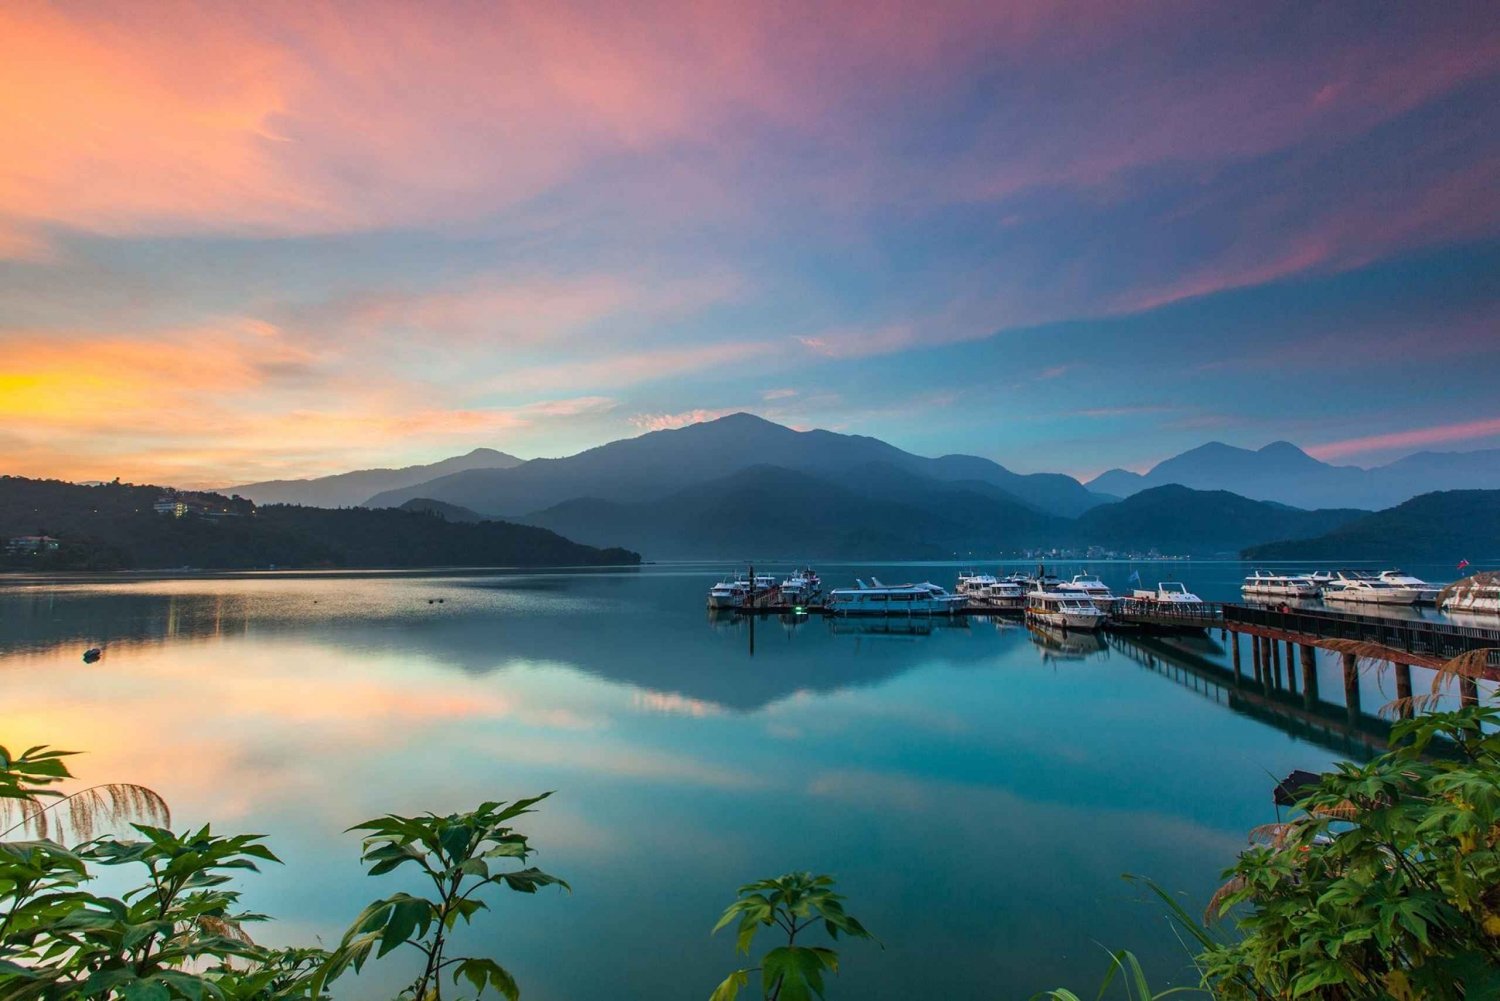 🛥️ Excursión Privada de 1 Día al Lago Sun Moon desde Taipei